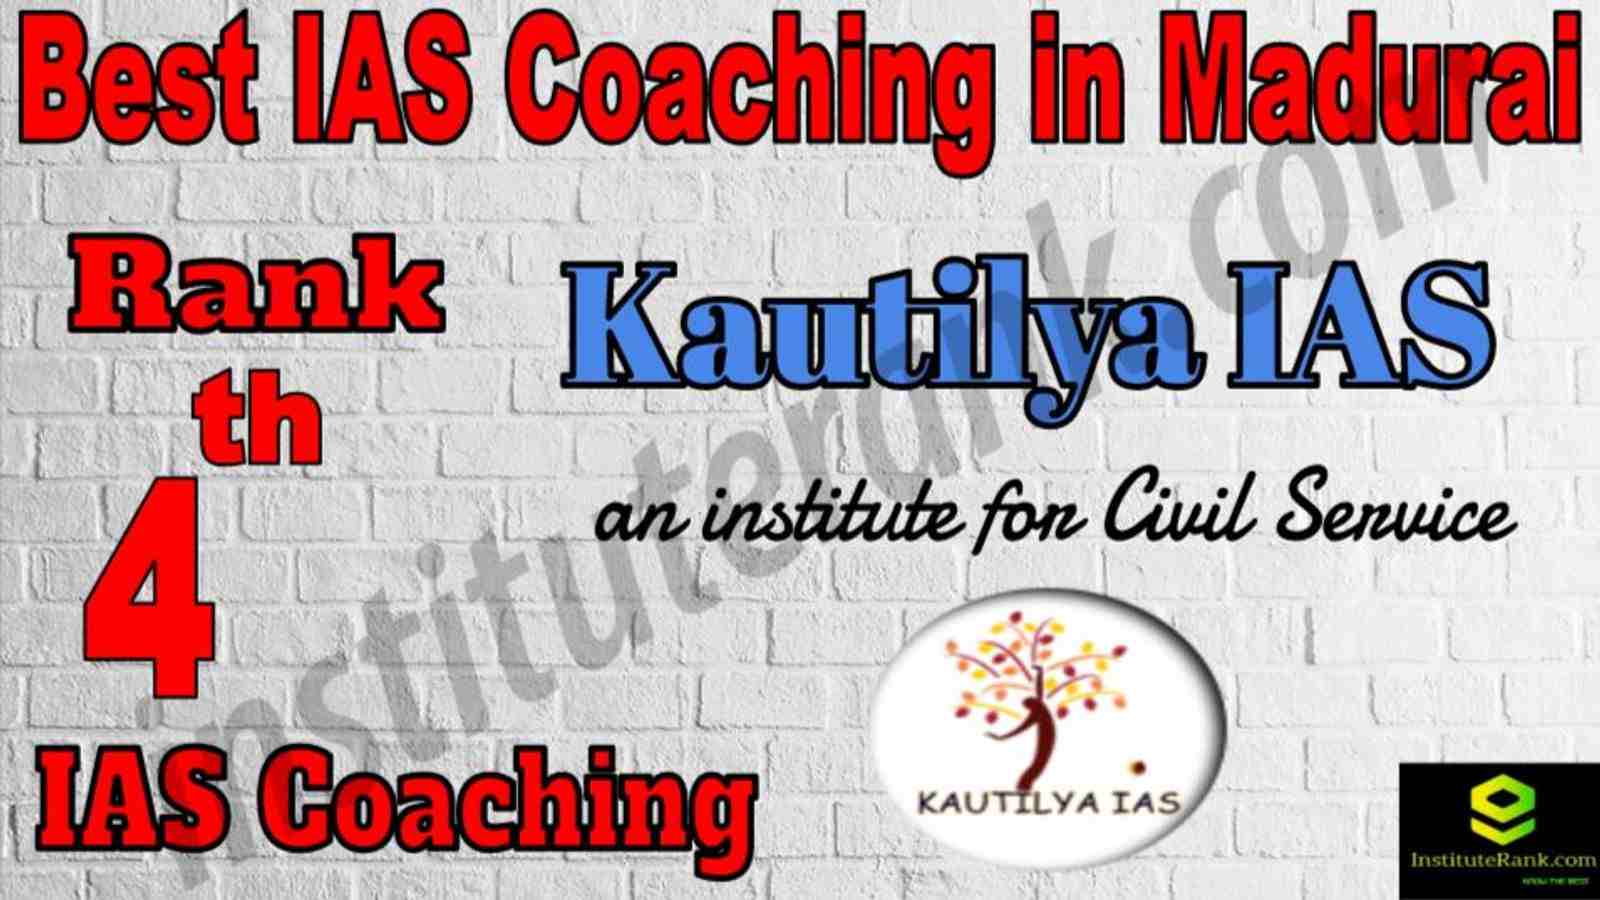 4th Best IAS Coaching in Madurai